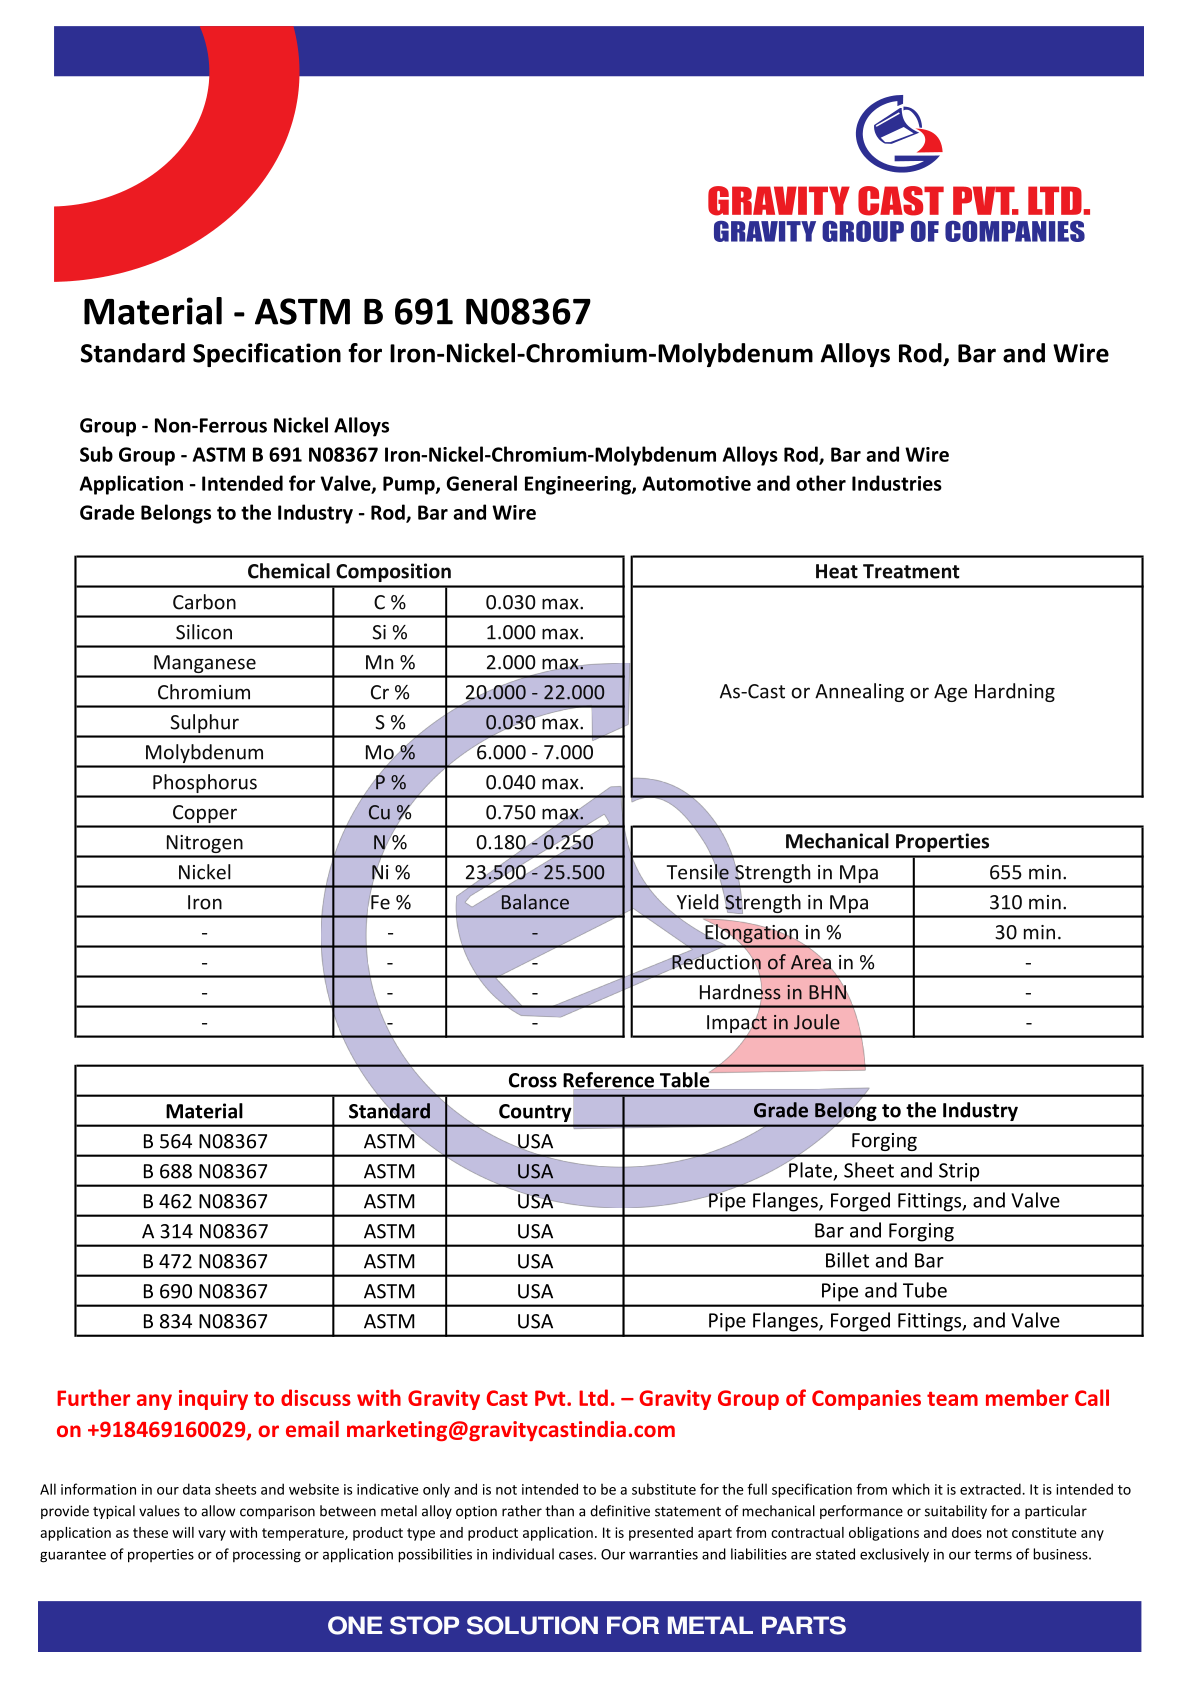 ASTM B 691 N08367.pdf